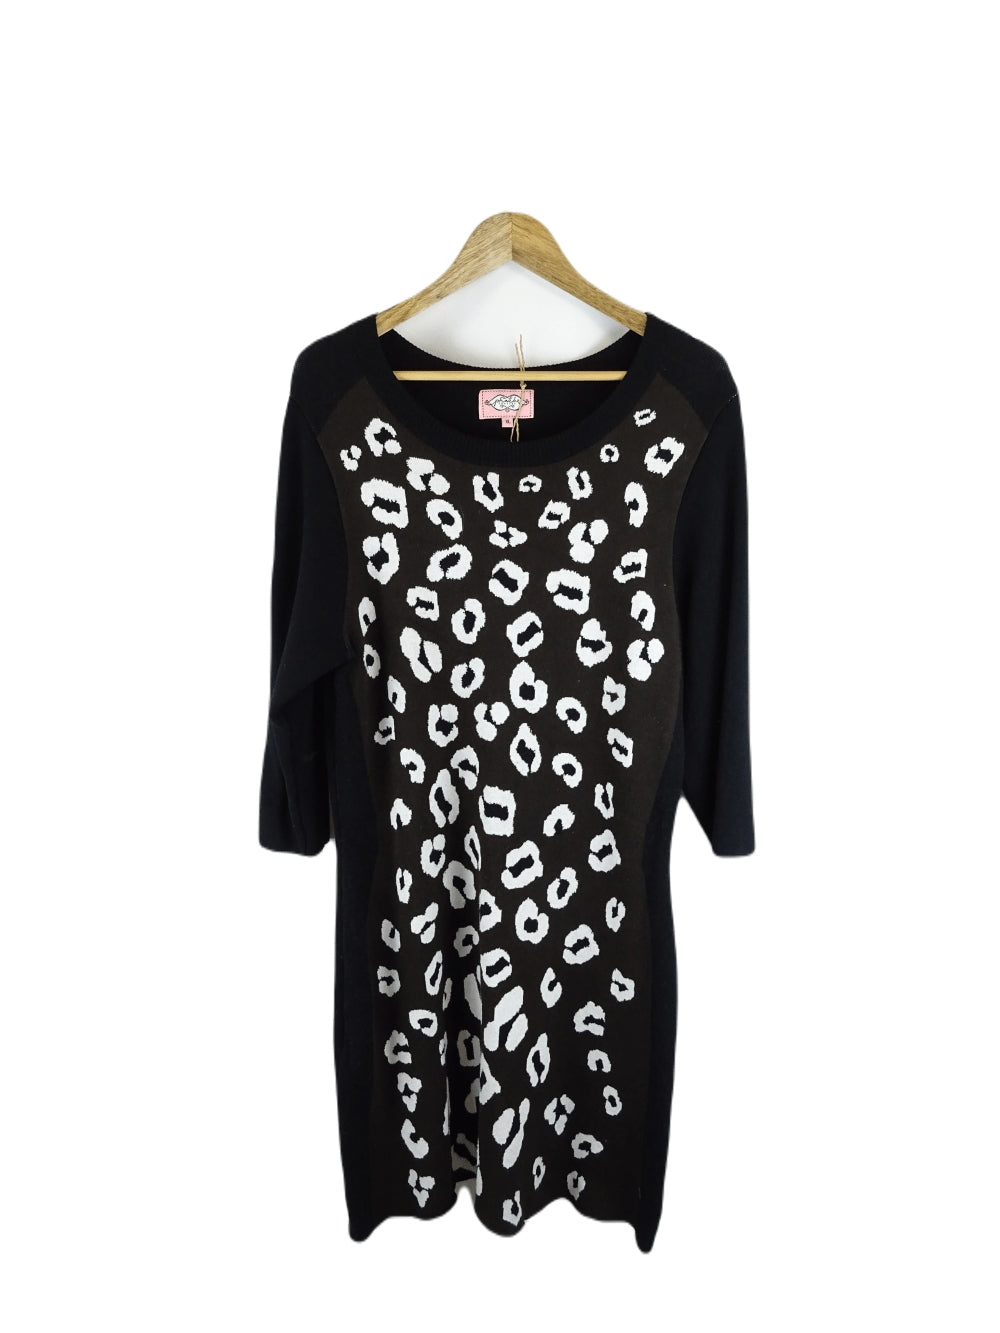 Phoebe Couture Animal Print Dress XL